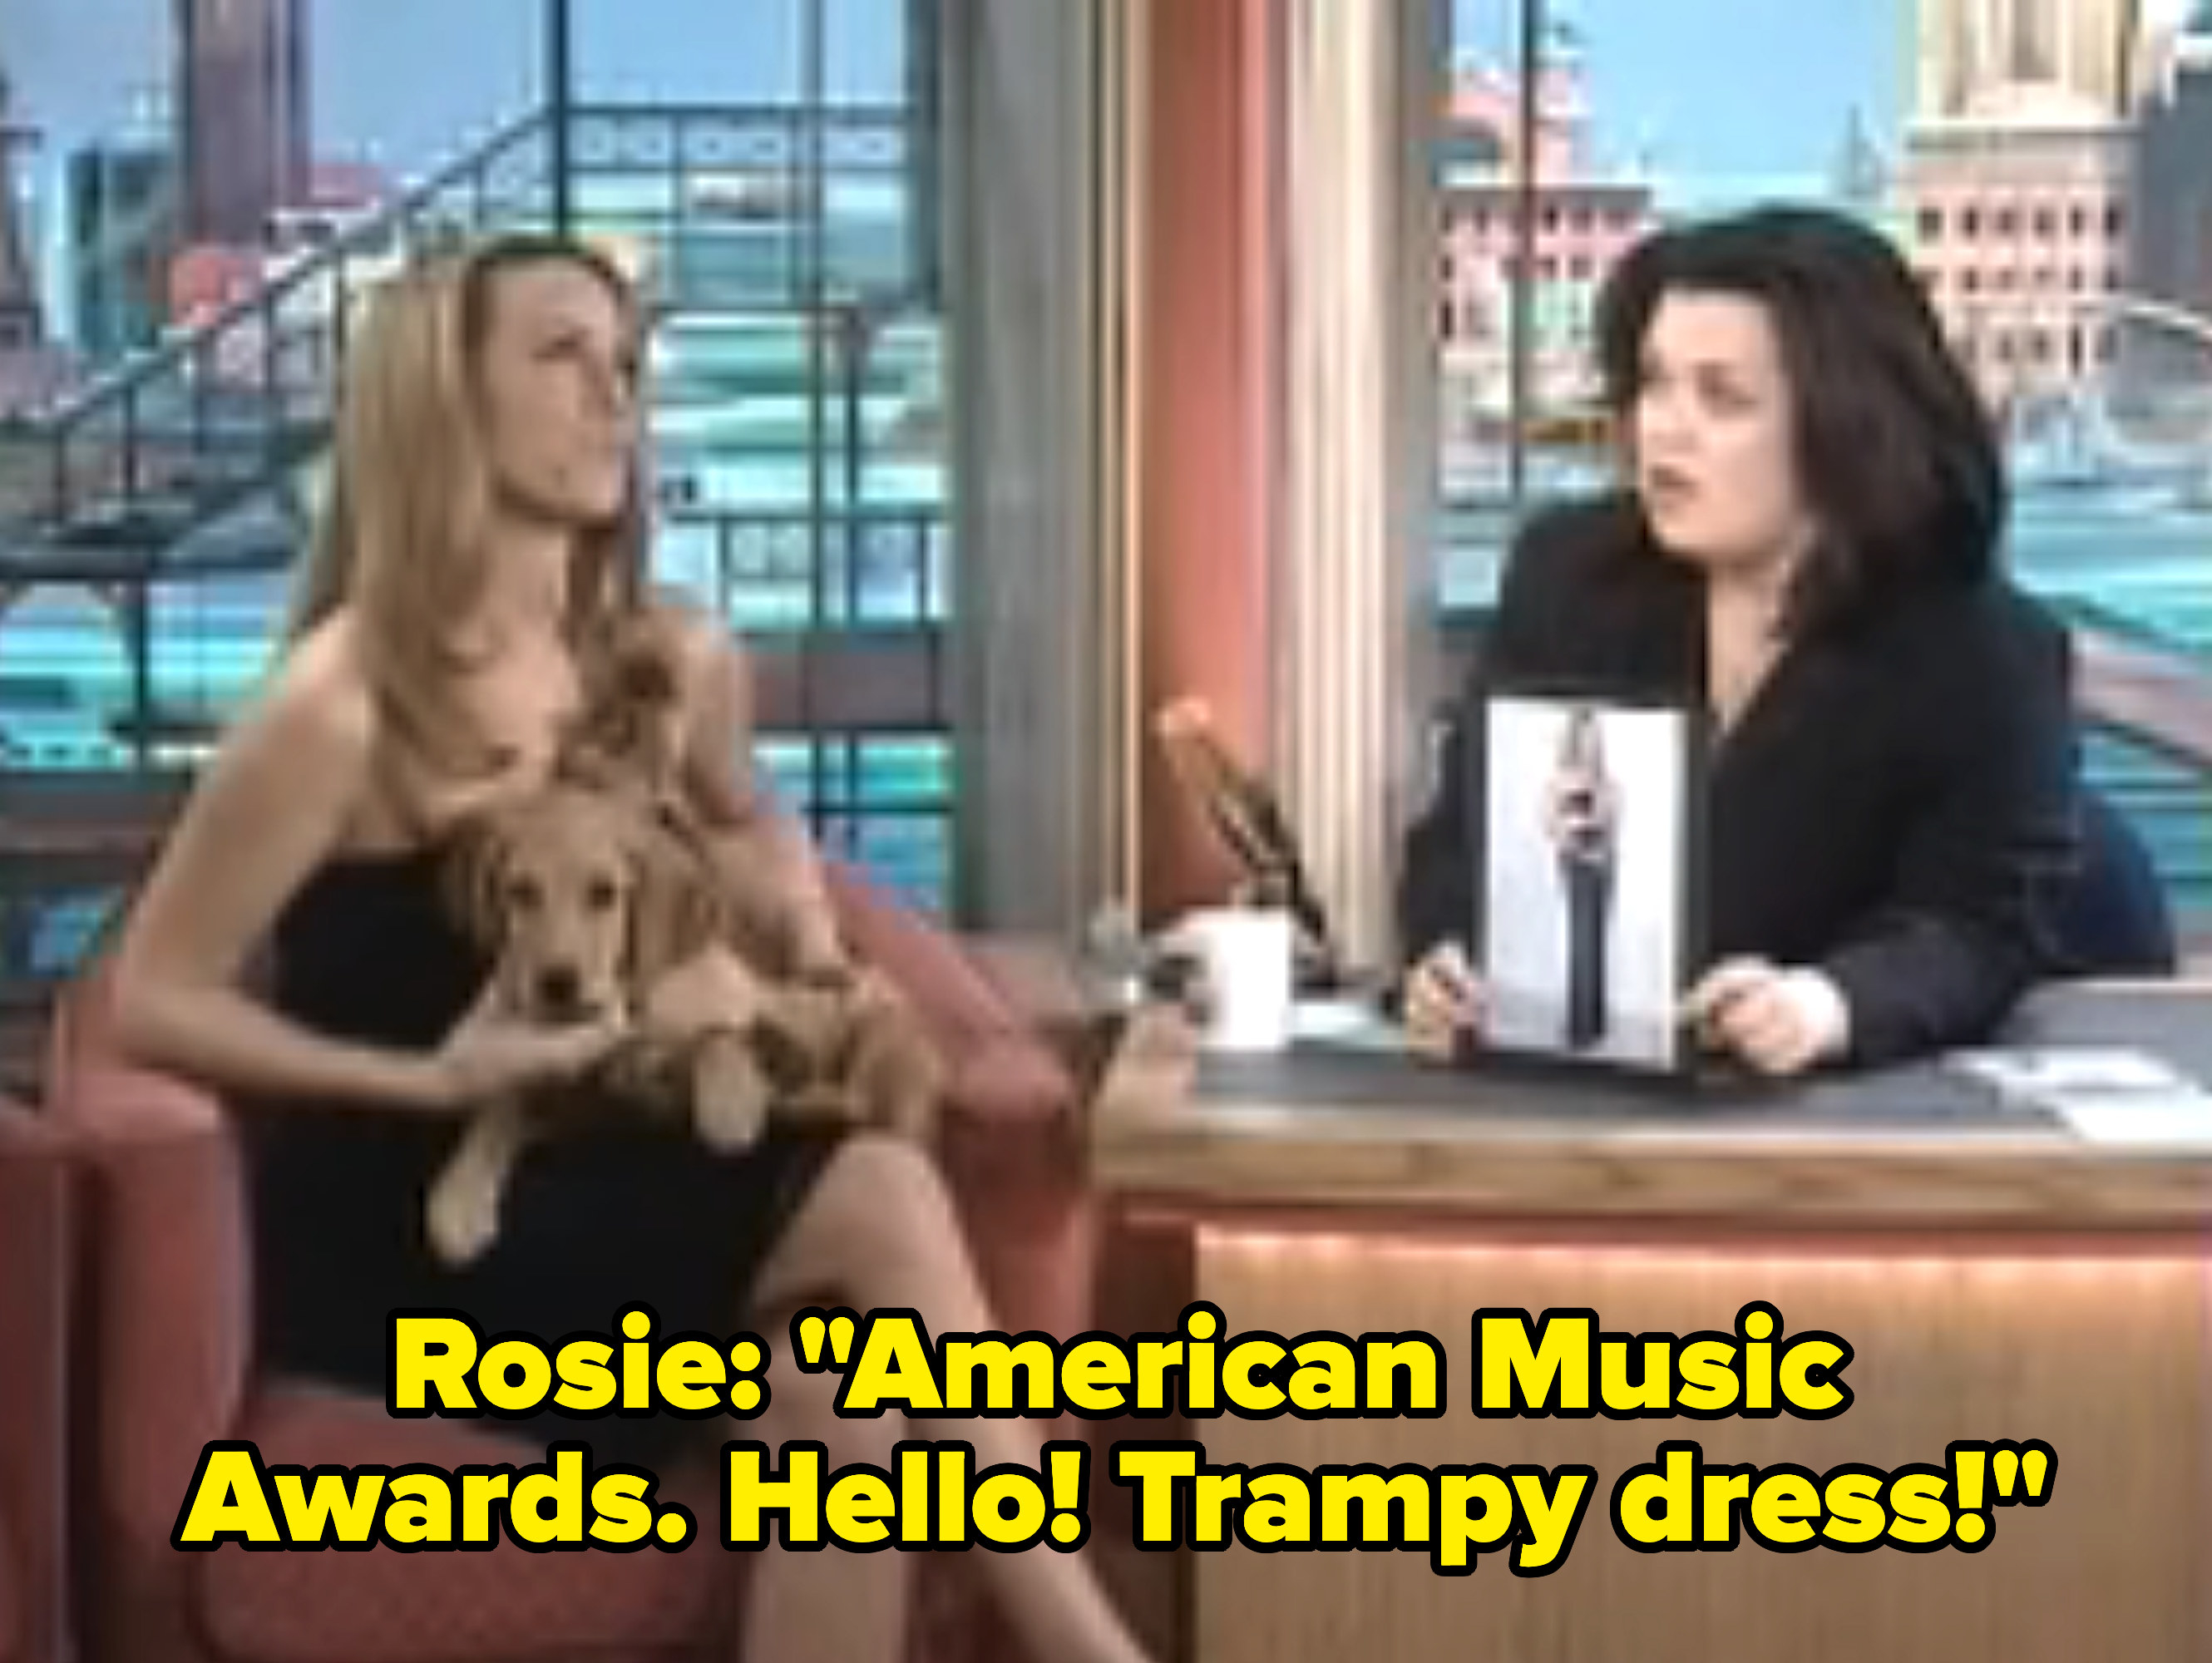 Rosie: American Music Awards, hello trampy dress